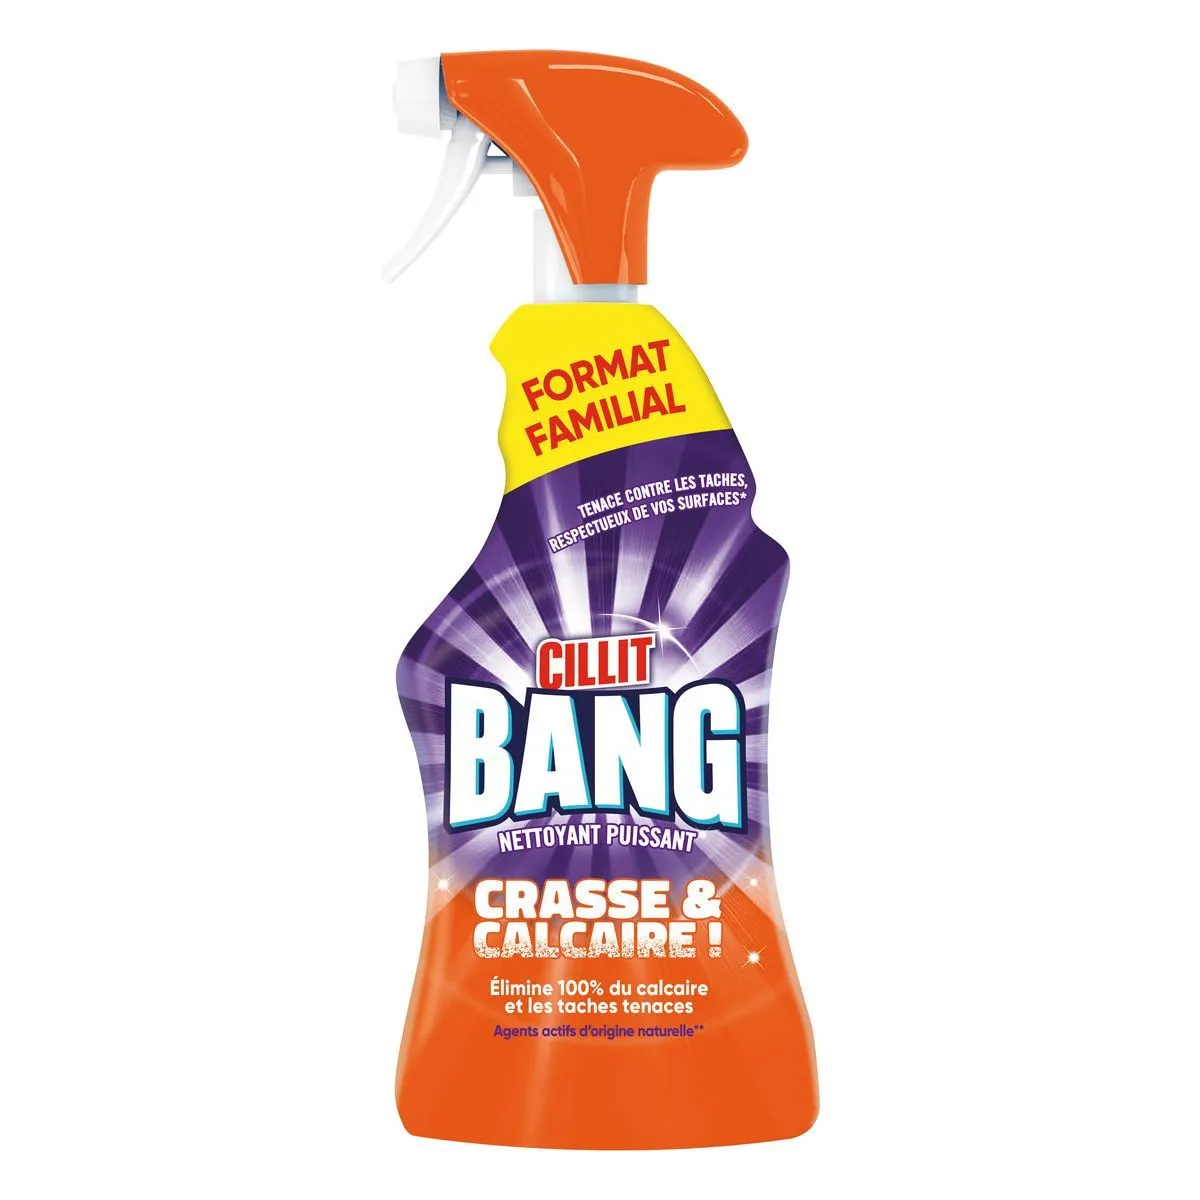 spray anti moissisures cilit bang